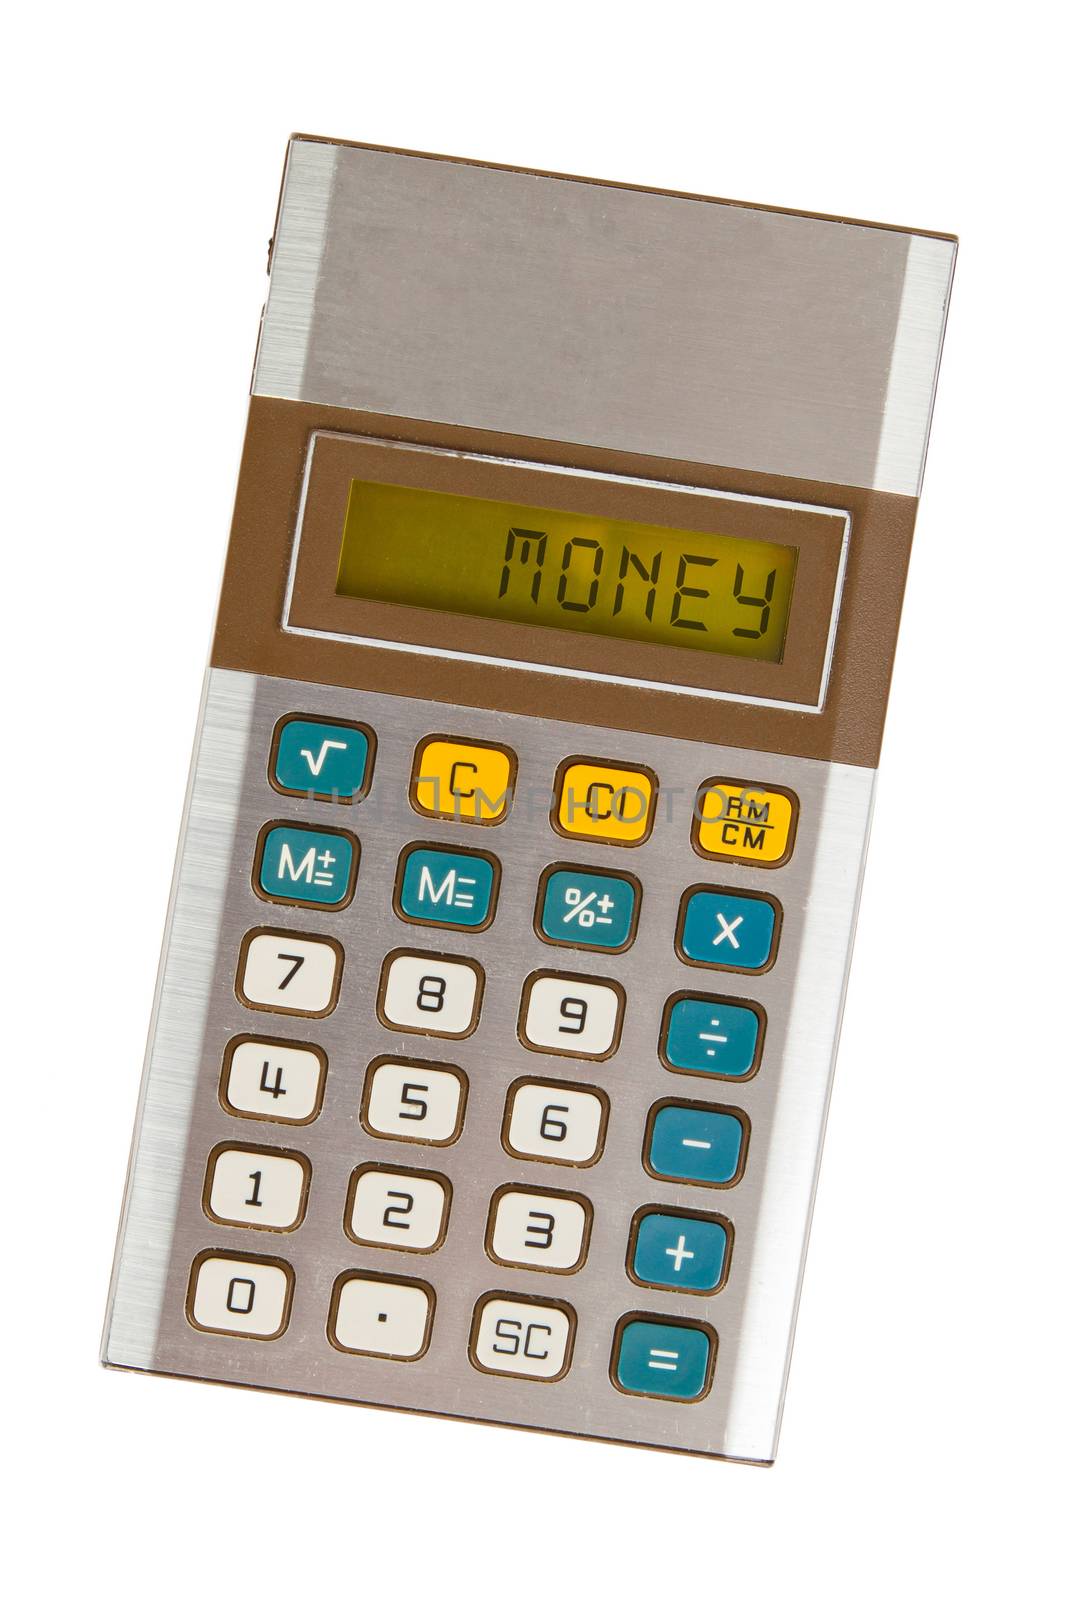 Old calculator - money by michaklootwijk